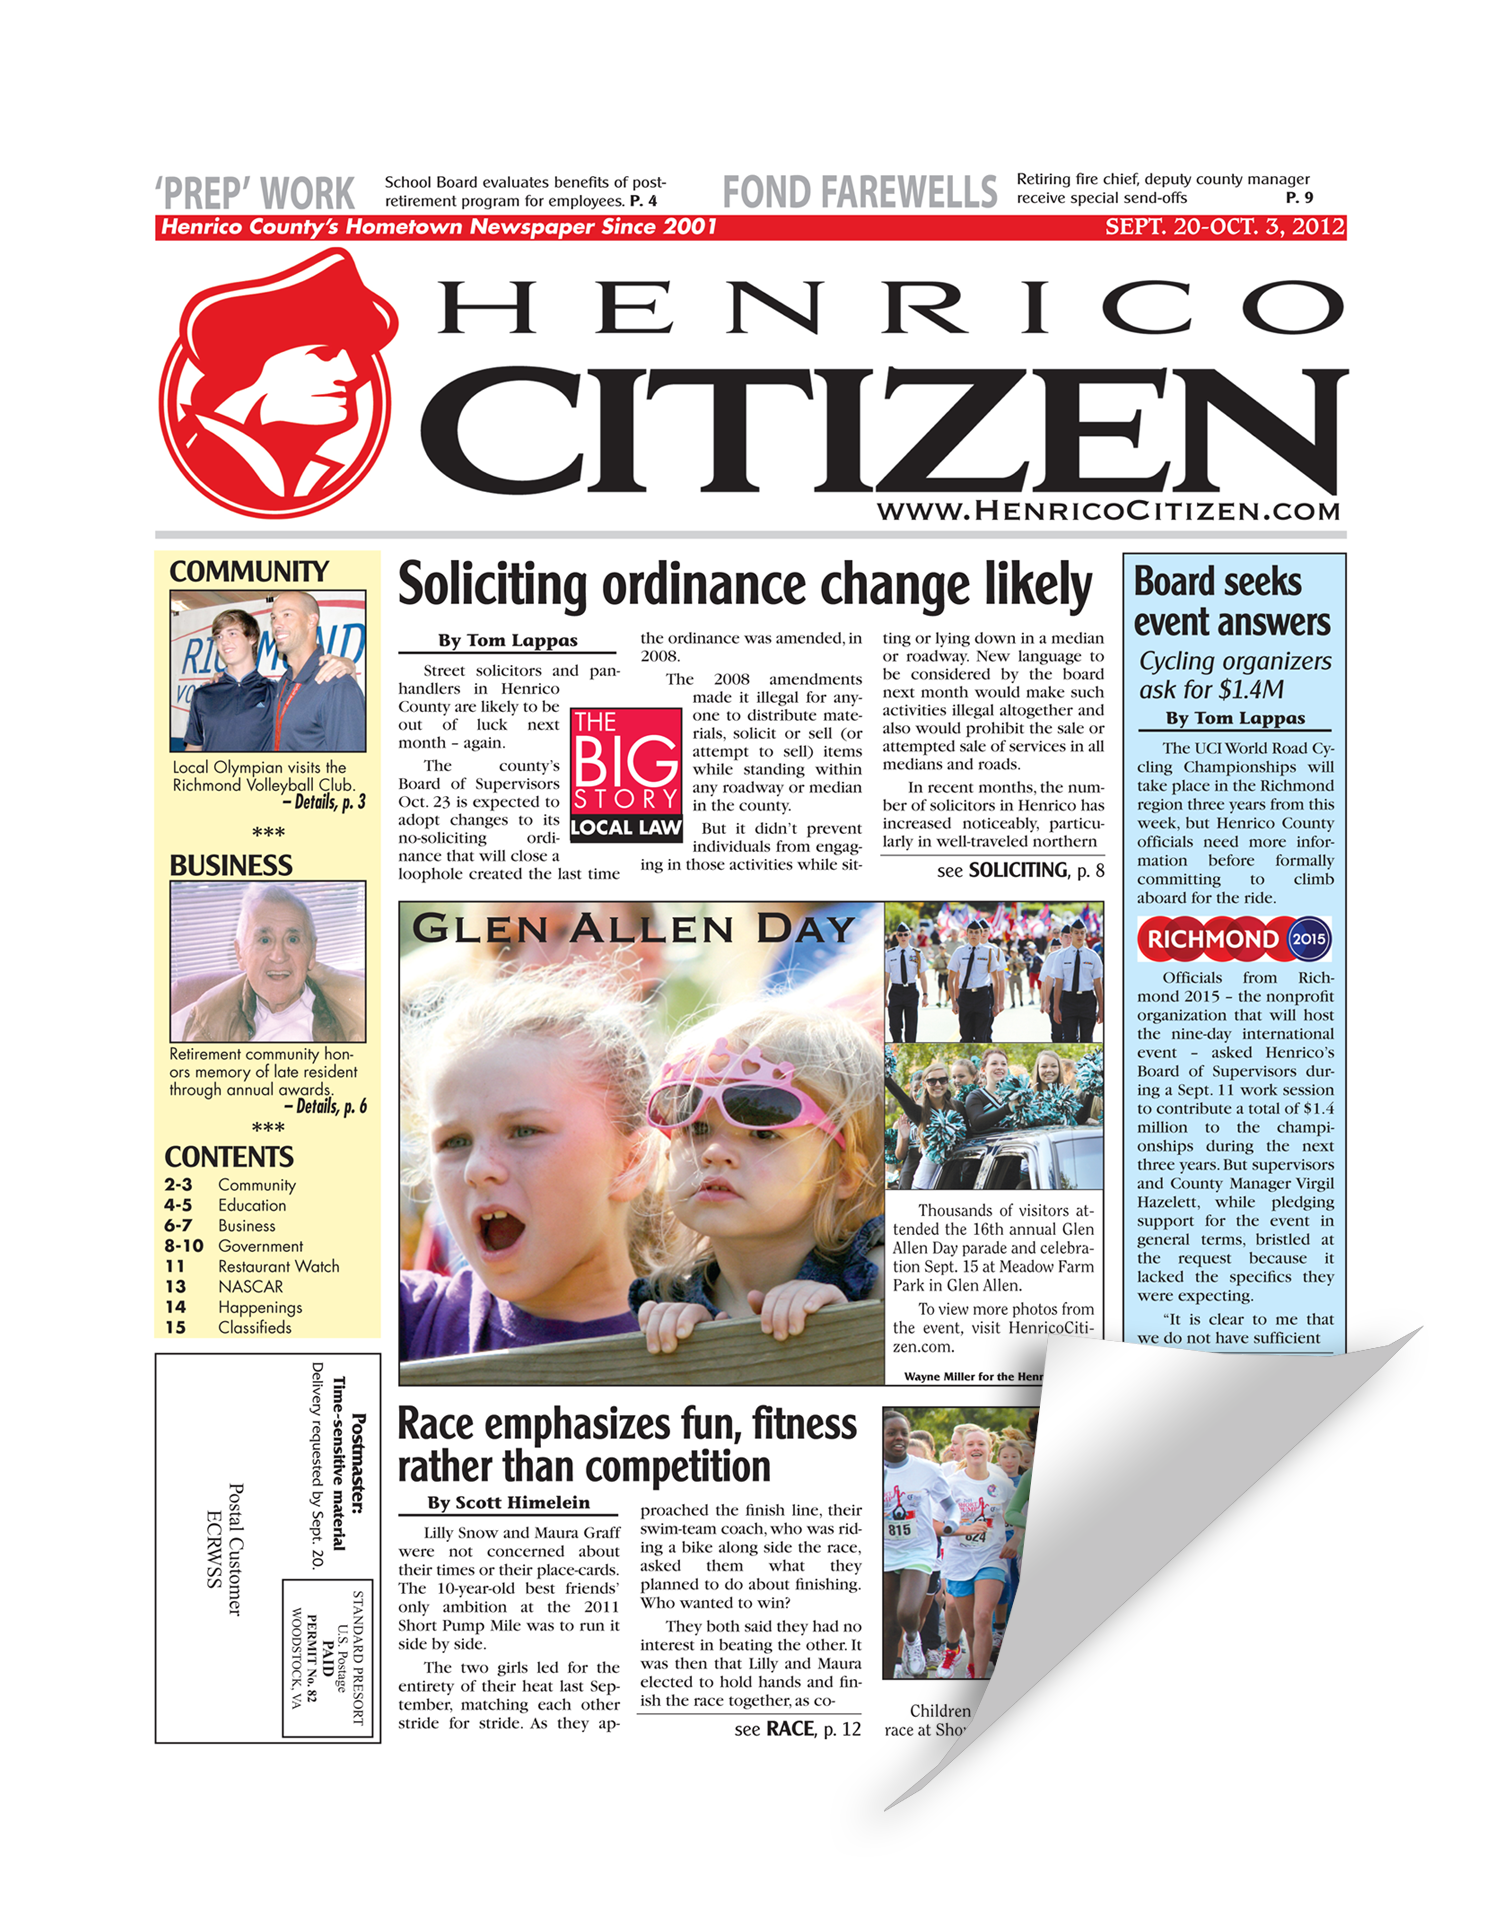 Henrico Citizen Cover Reprint by NewsKeepsake